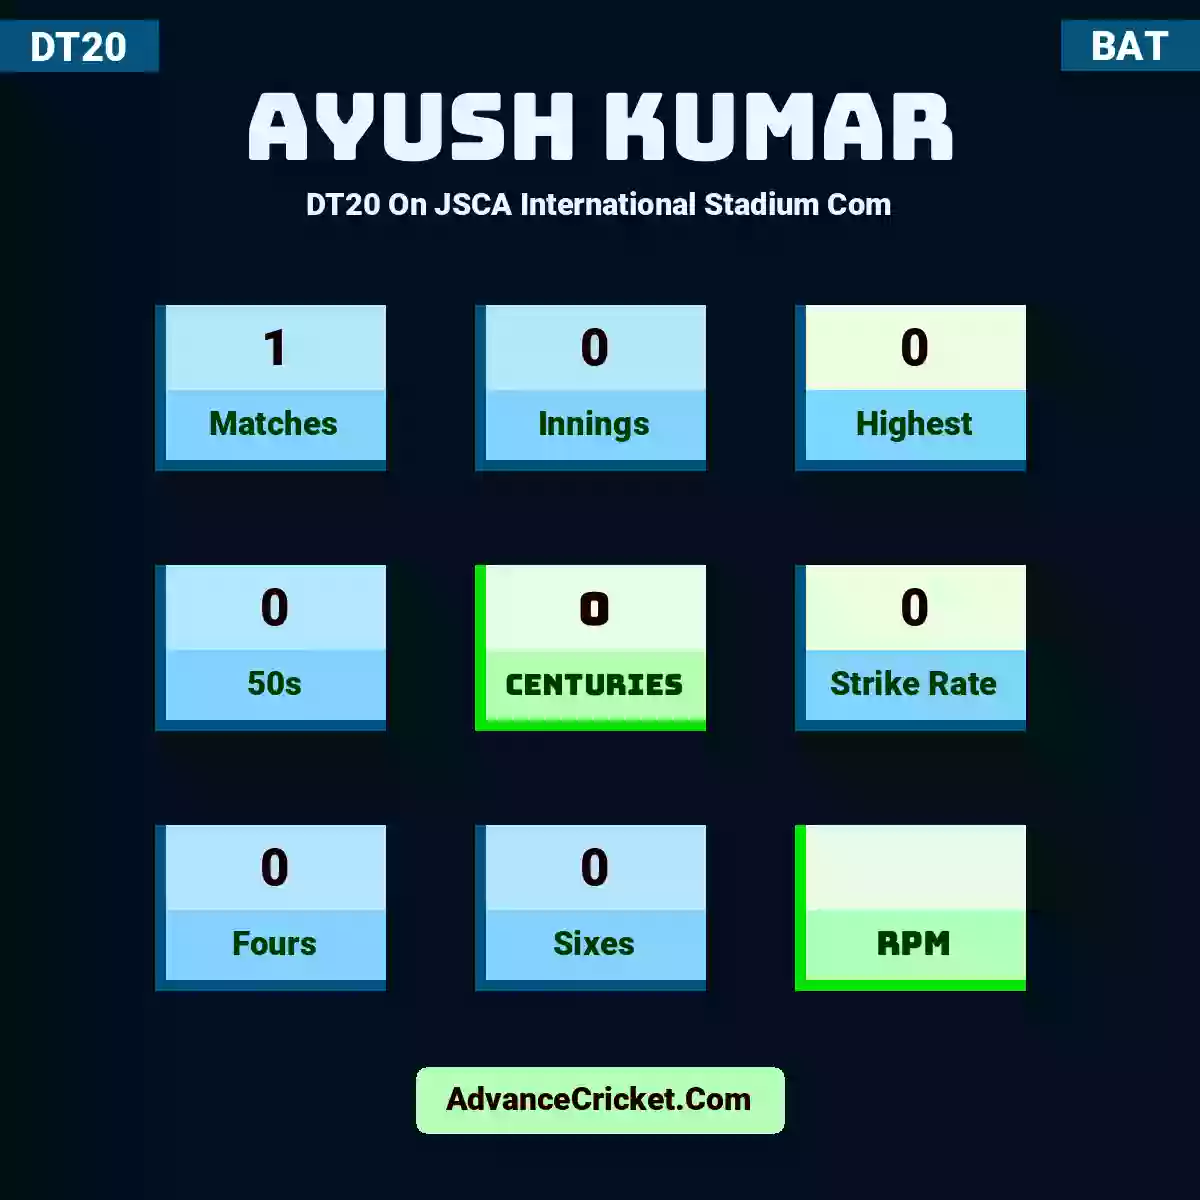 Ayush Kumar DT20  On JSCA International Stadium Com, Ayush Kumar played 1 matches, scored 0 runs as highest, 0 half-centuries, and 0 centuries, with a strike rate of 0. A.Kumar hit 0 fours and 0 sixes.